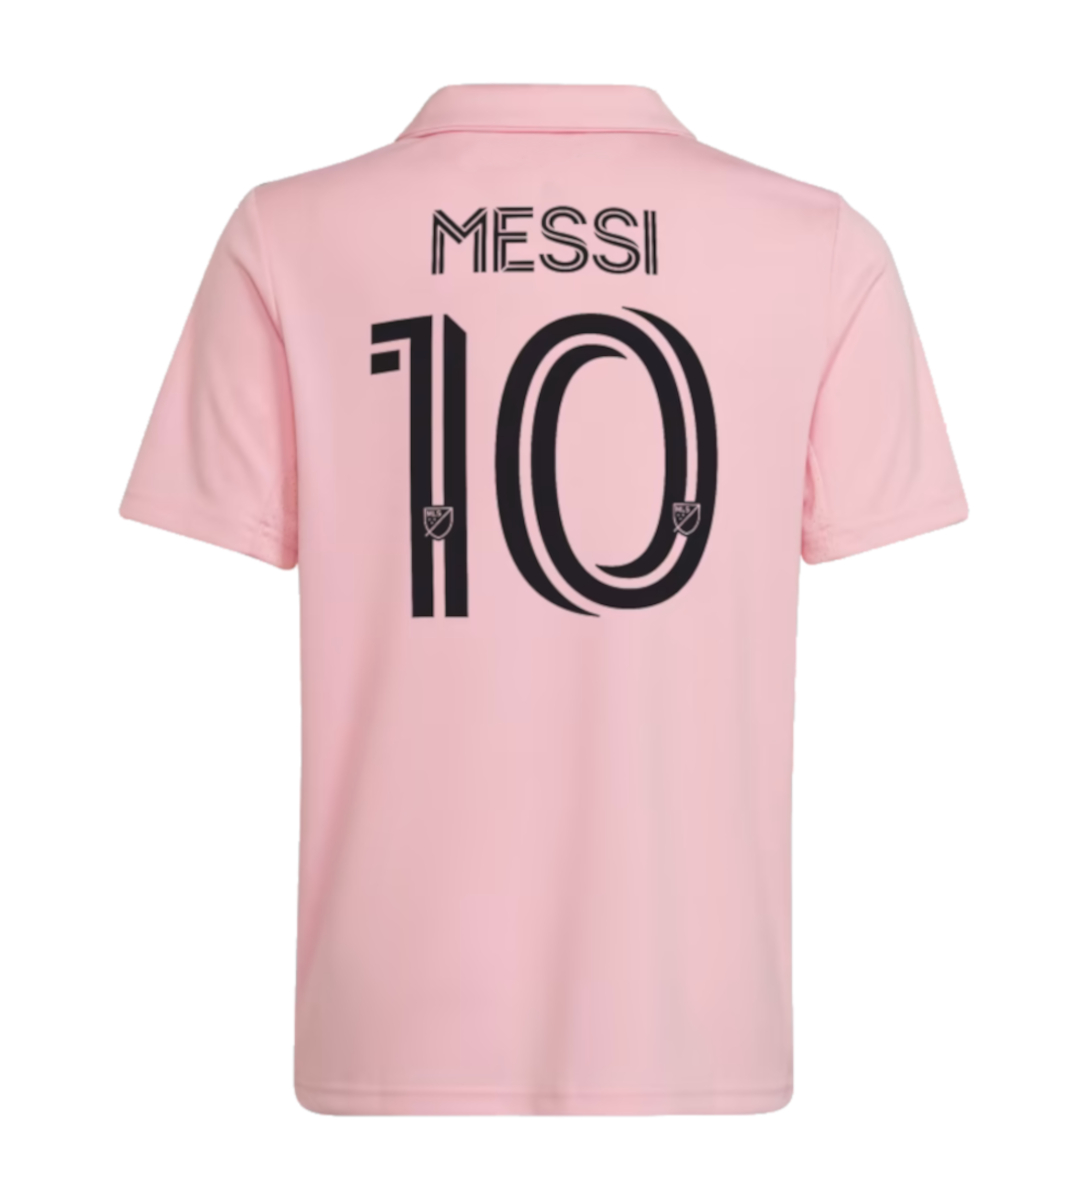 Messi 10 Inter Miami Jersey Pink